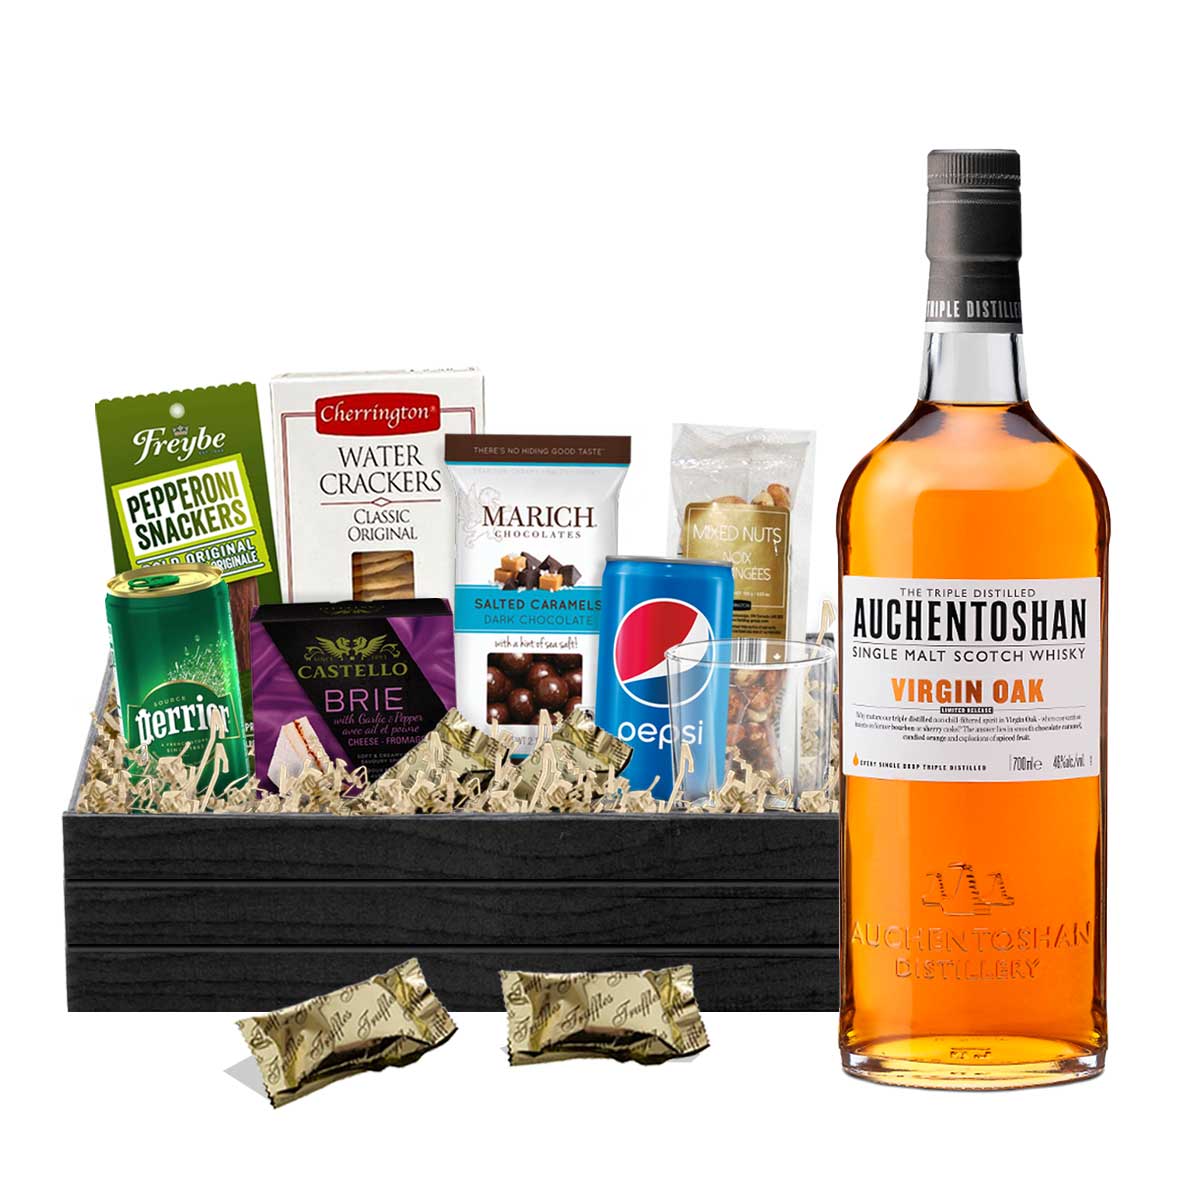 TAG Liquor Stores BC - Auchentoshan Virgin Oak Scotch Whisky 750ml Gift Basket